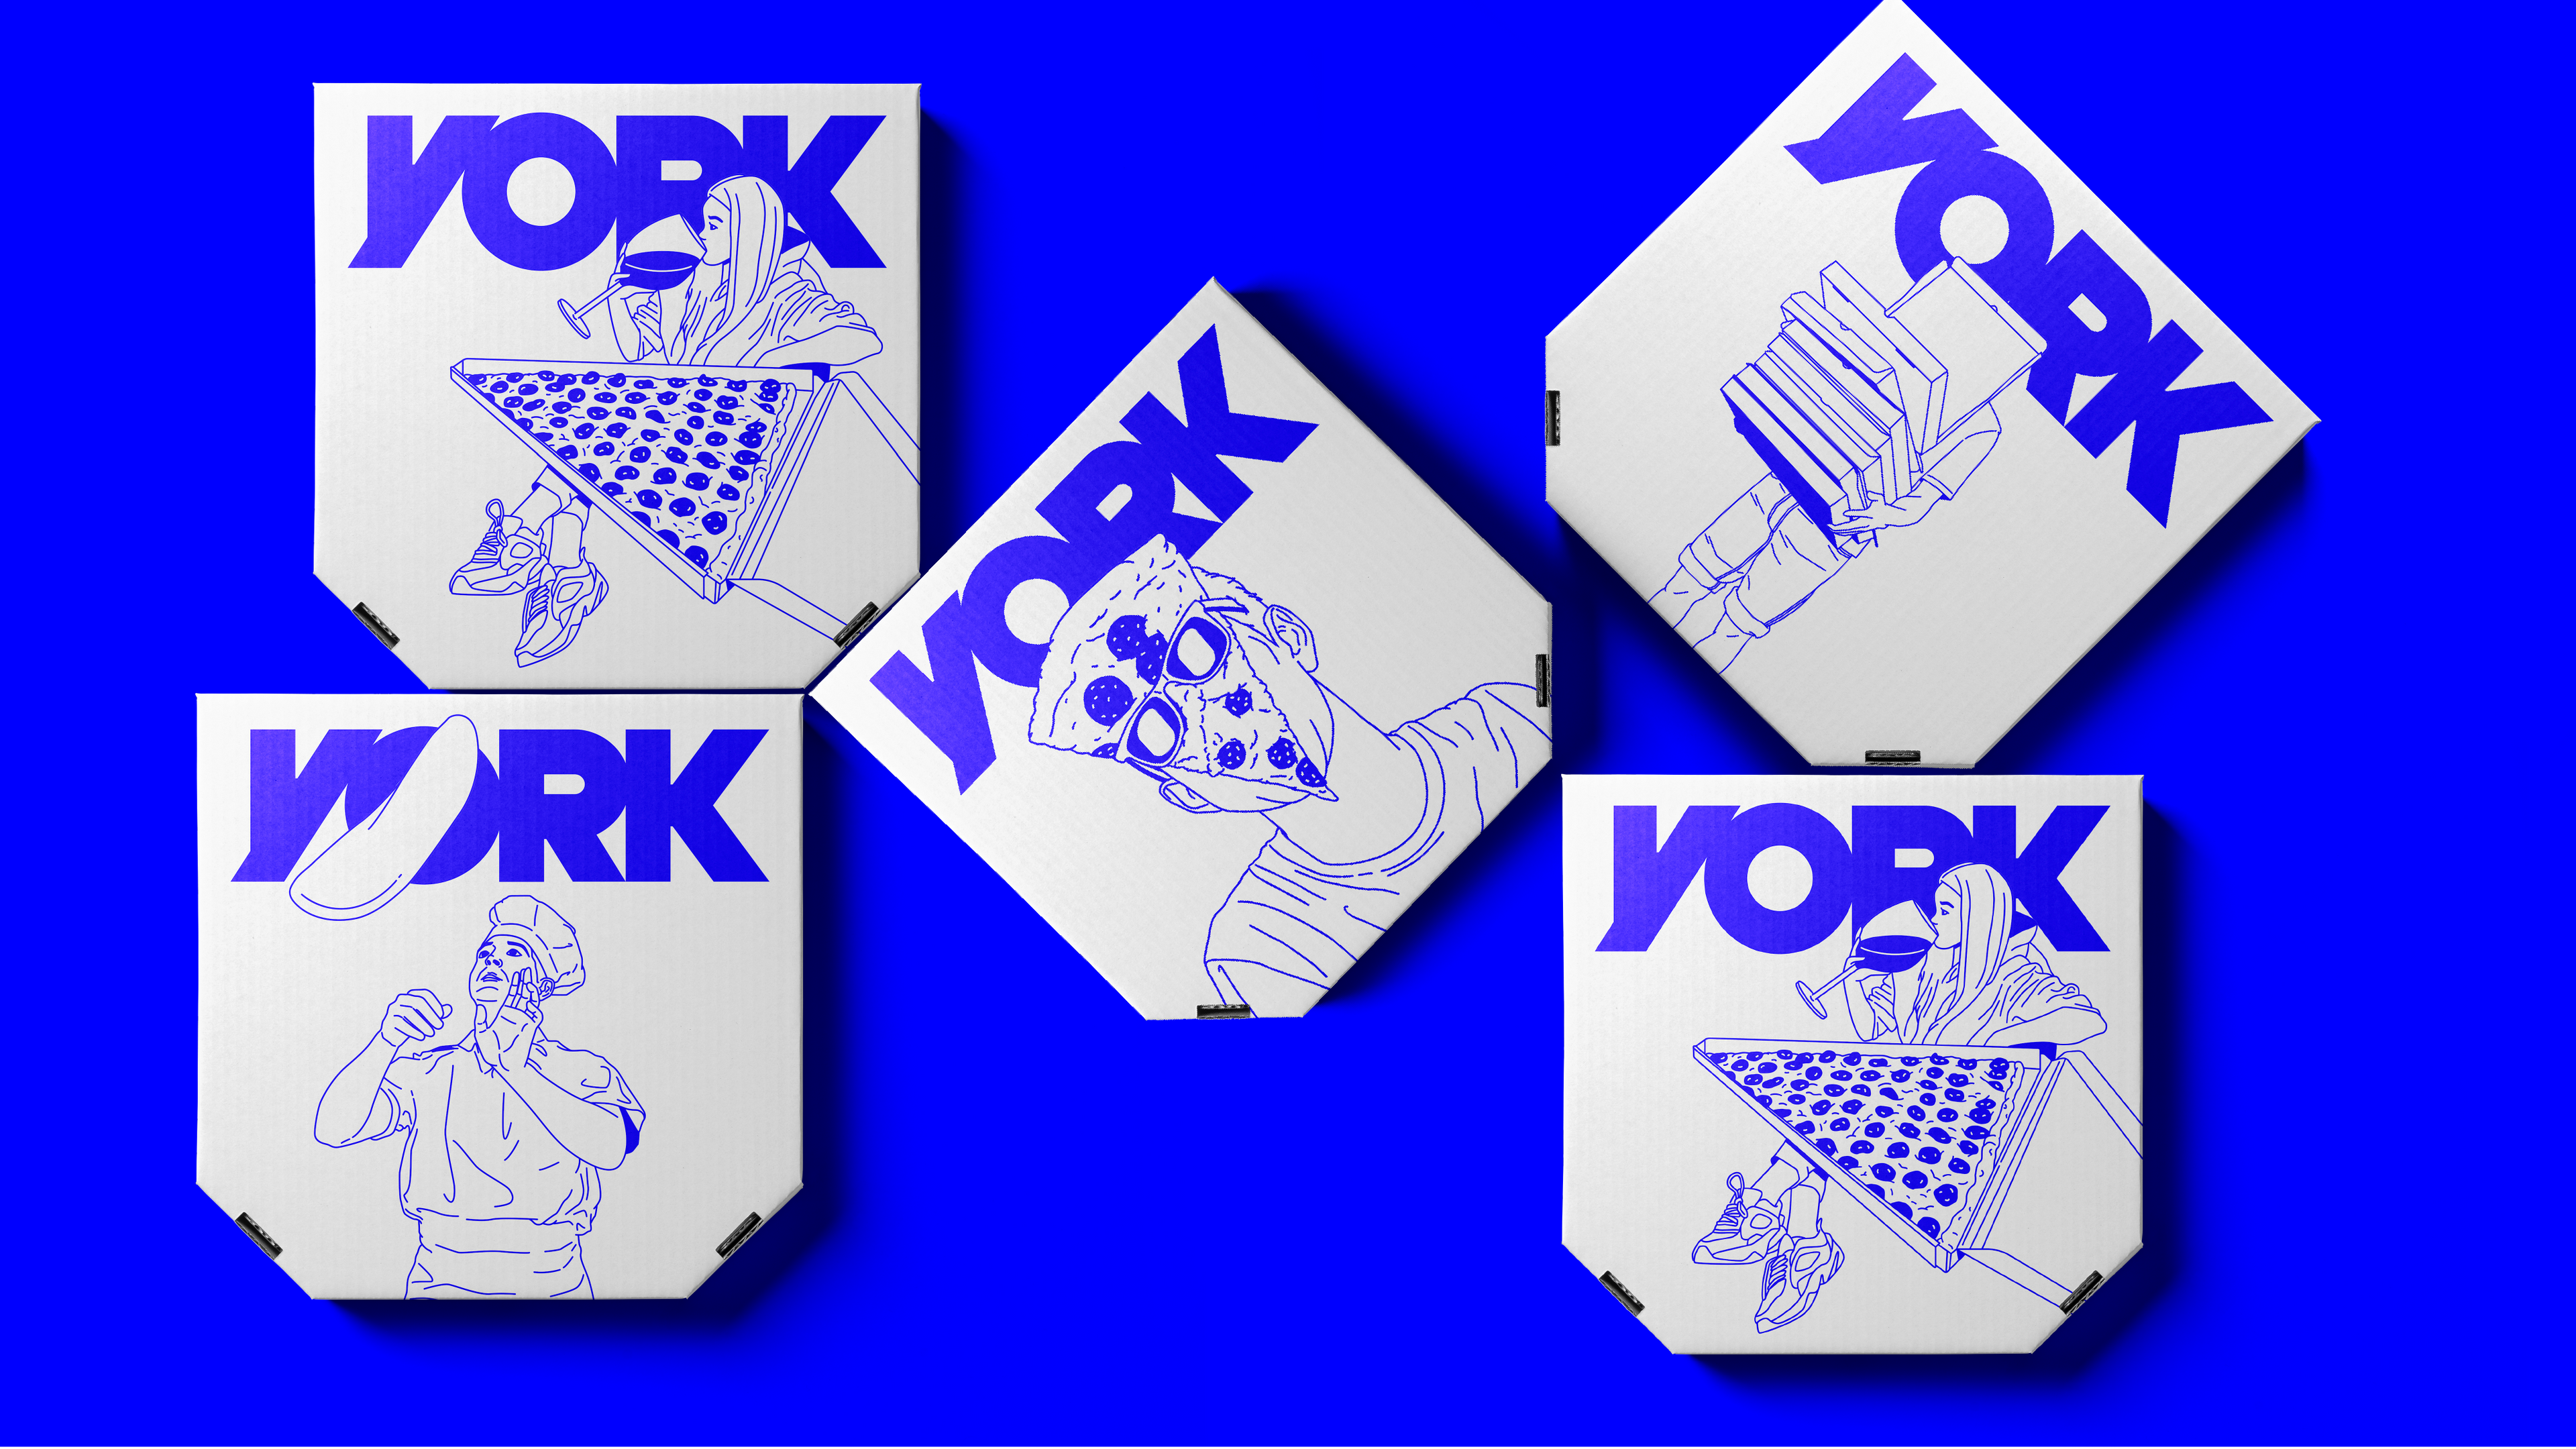 Cajas de pizza york branding valencia venezuelaa